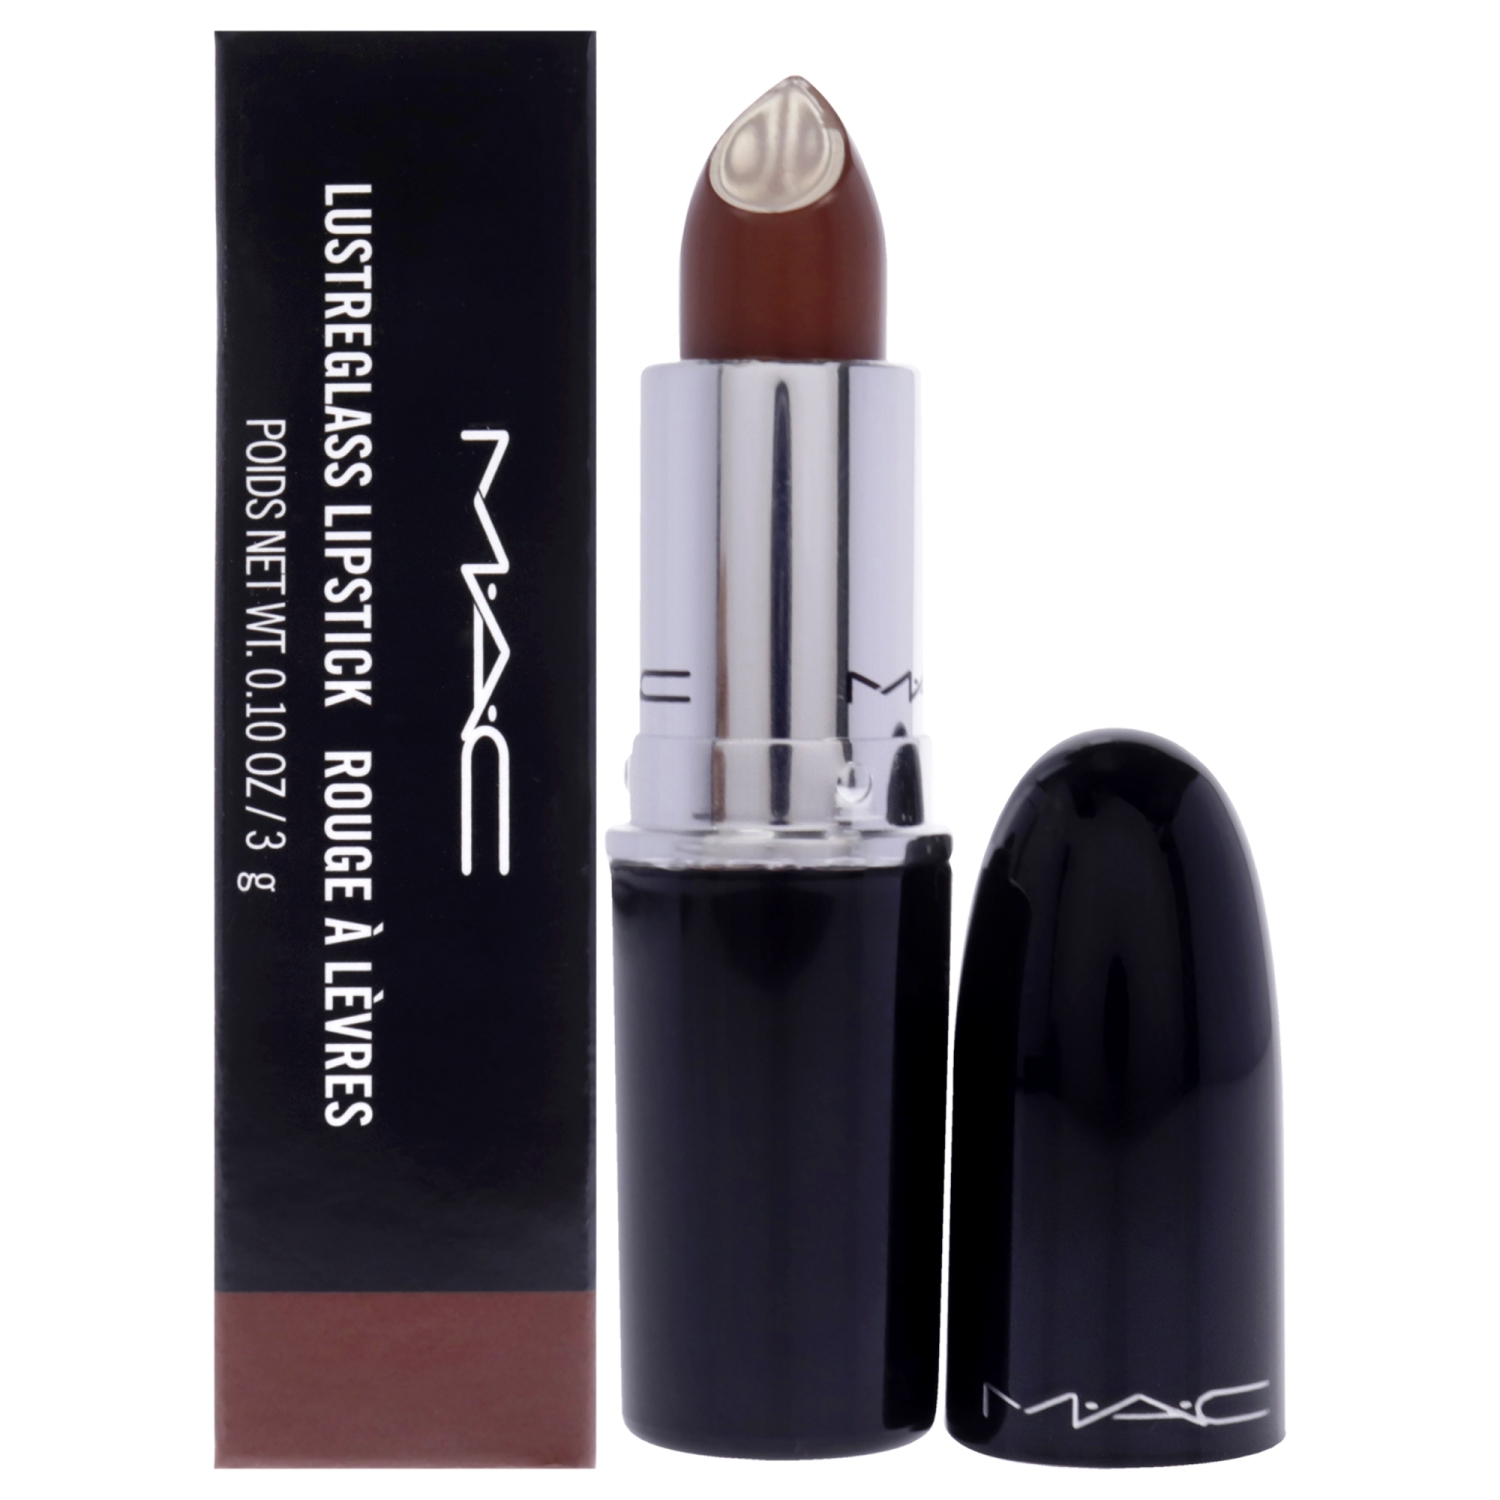 Lustreglass Sheer Shine Lipstick - 554 Cant Dull My Shine by MAC for Women - 0.1 oz Lipstick